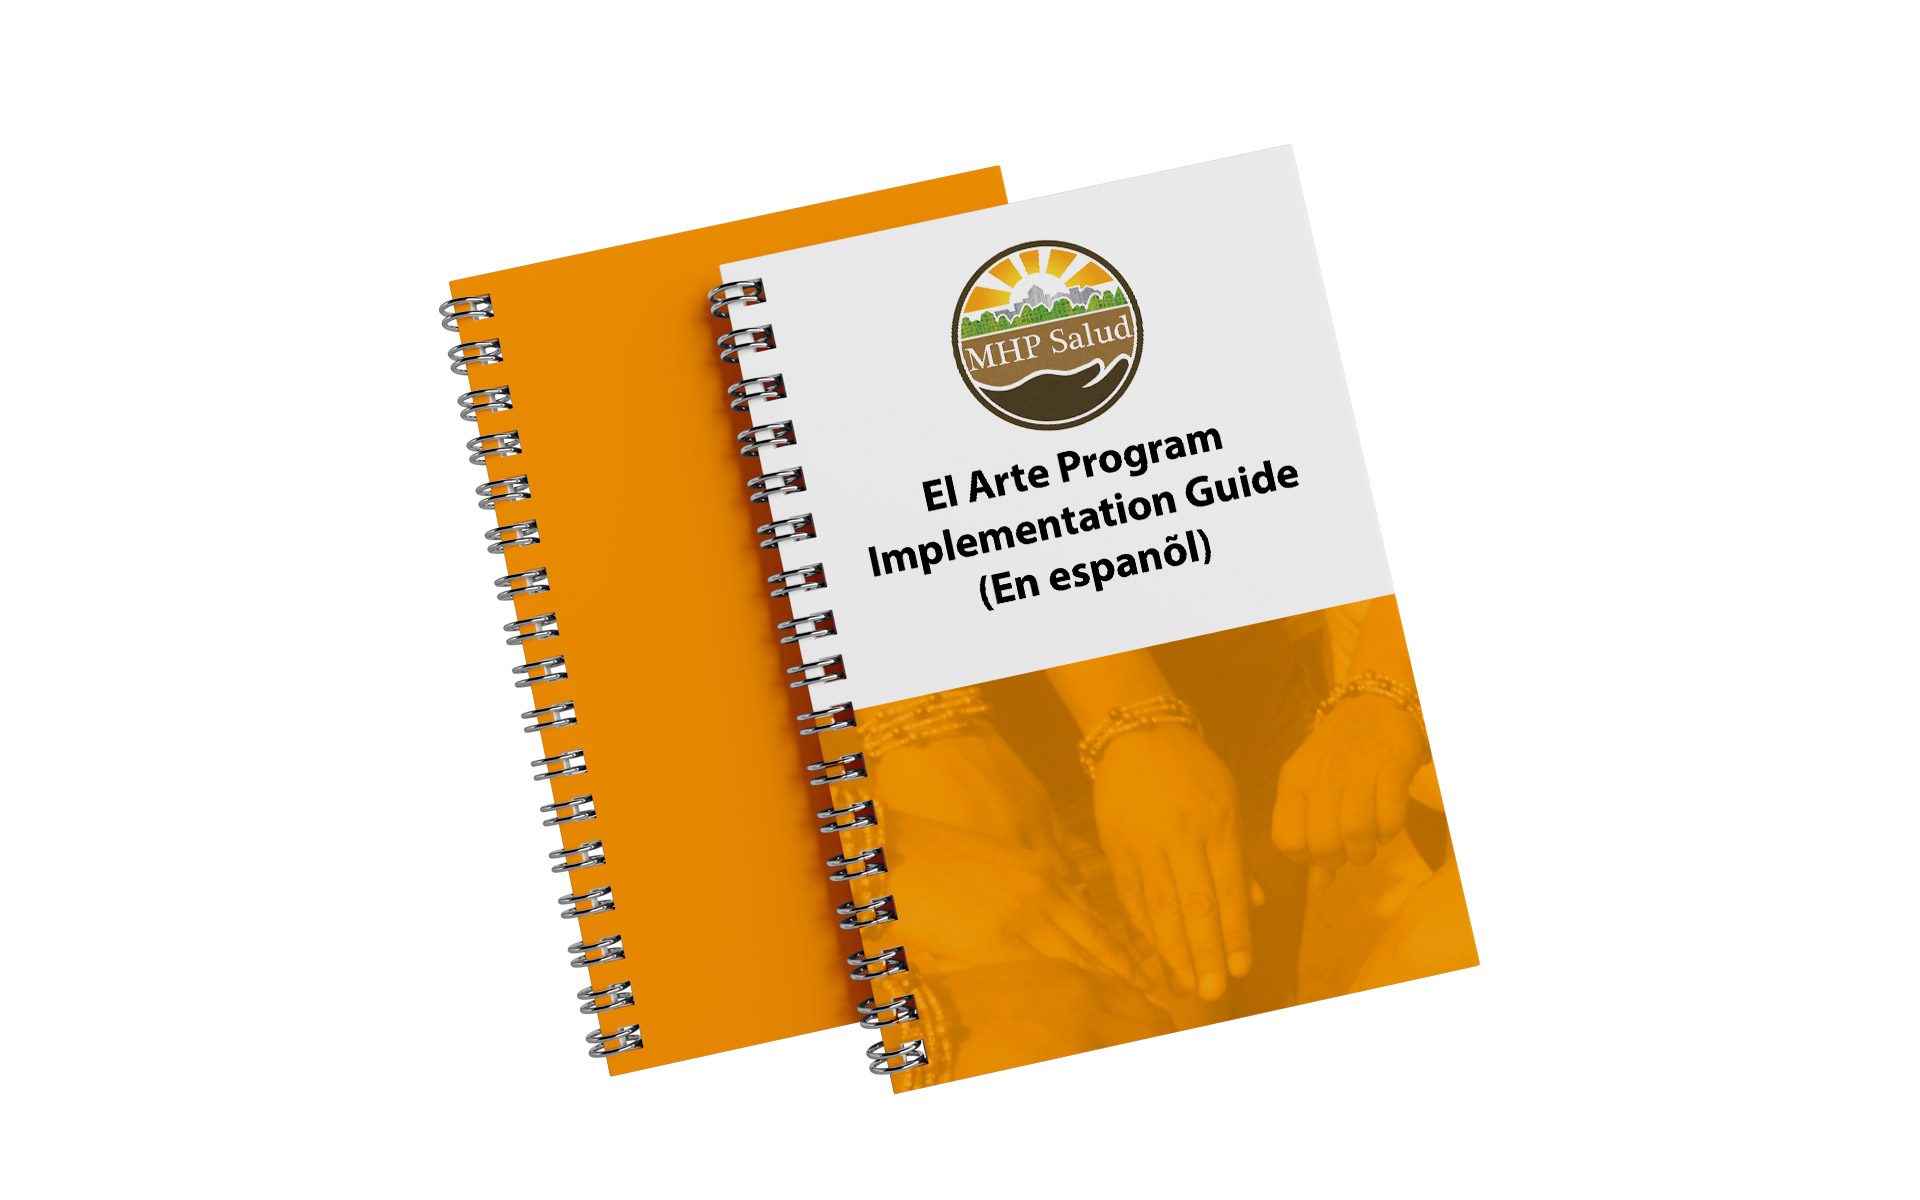 El Arte Program Implementation Guide